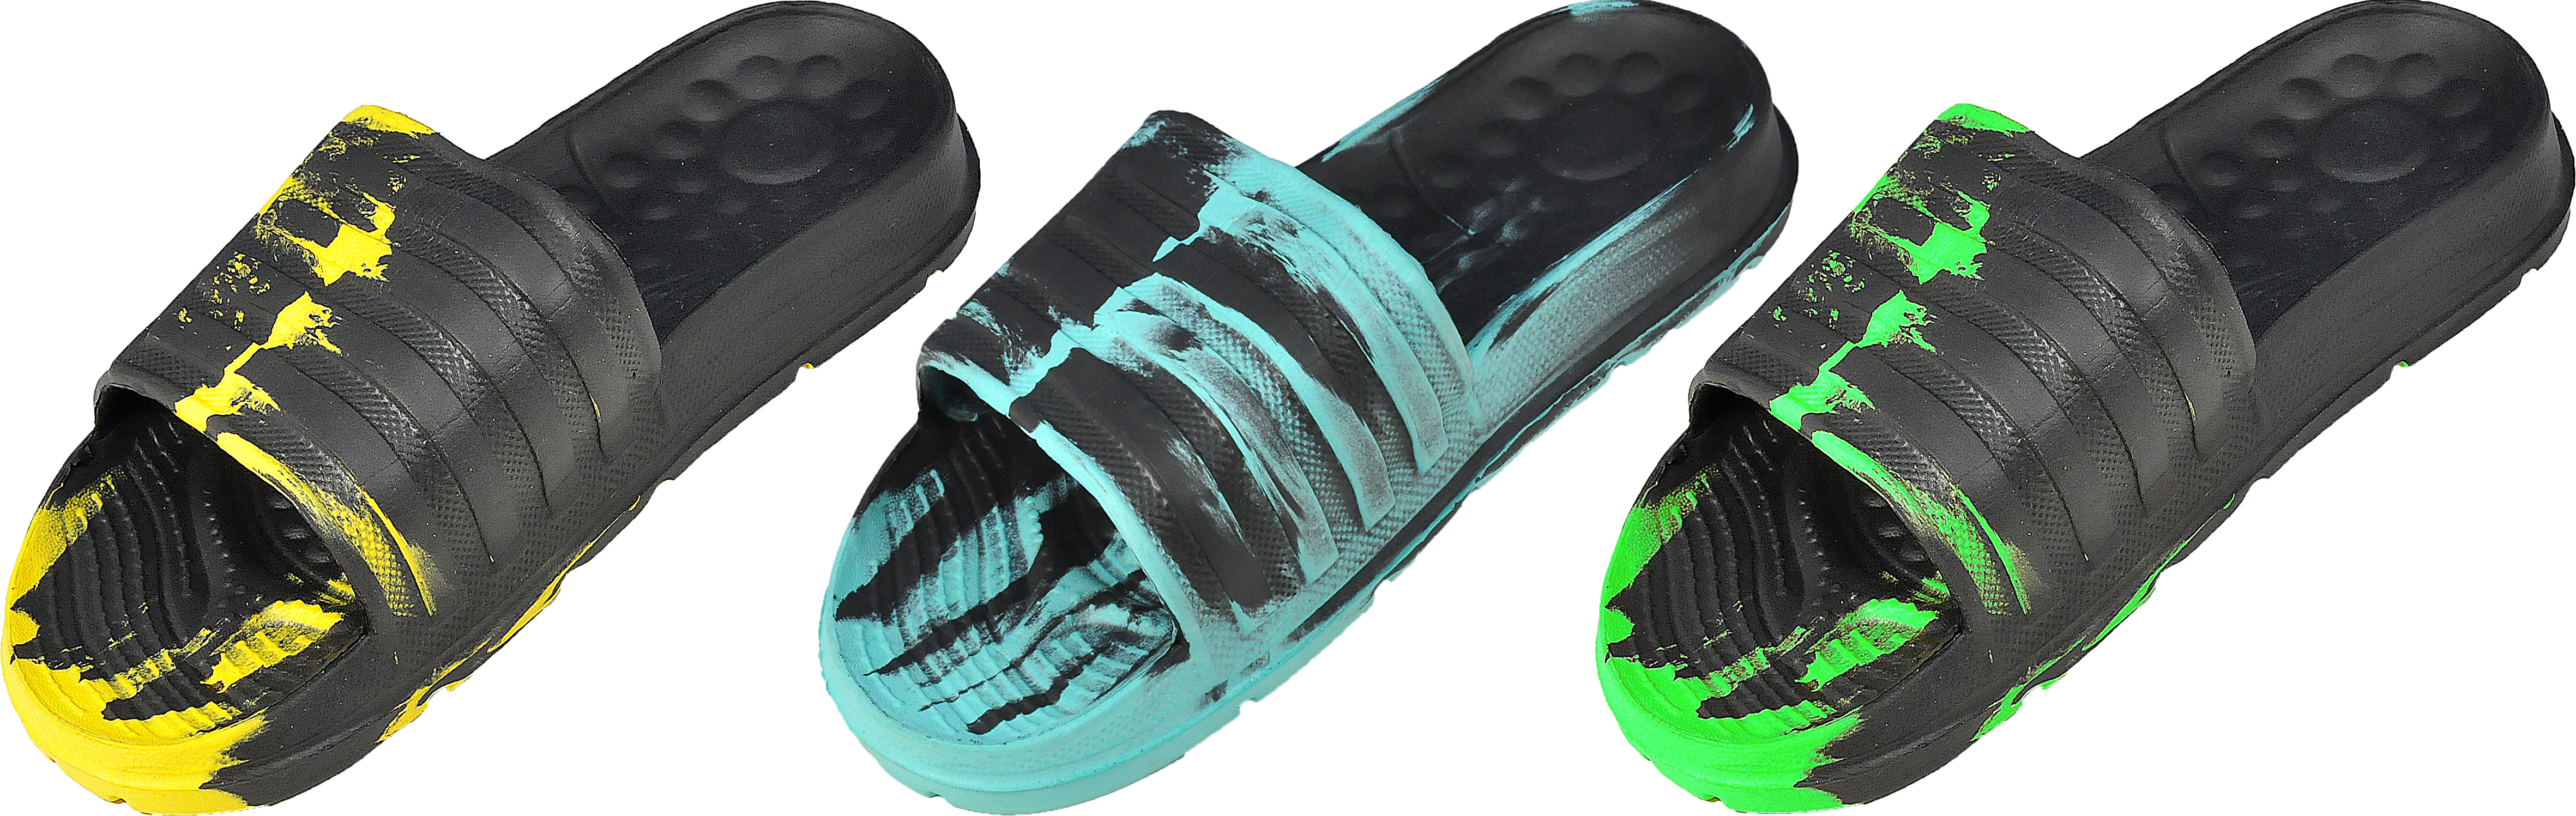 Men's Ribbed Barbados Slide Sandals w/ PAINT Tie-Dye Print